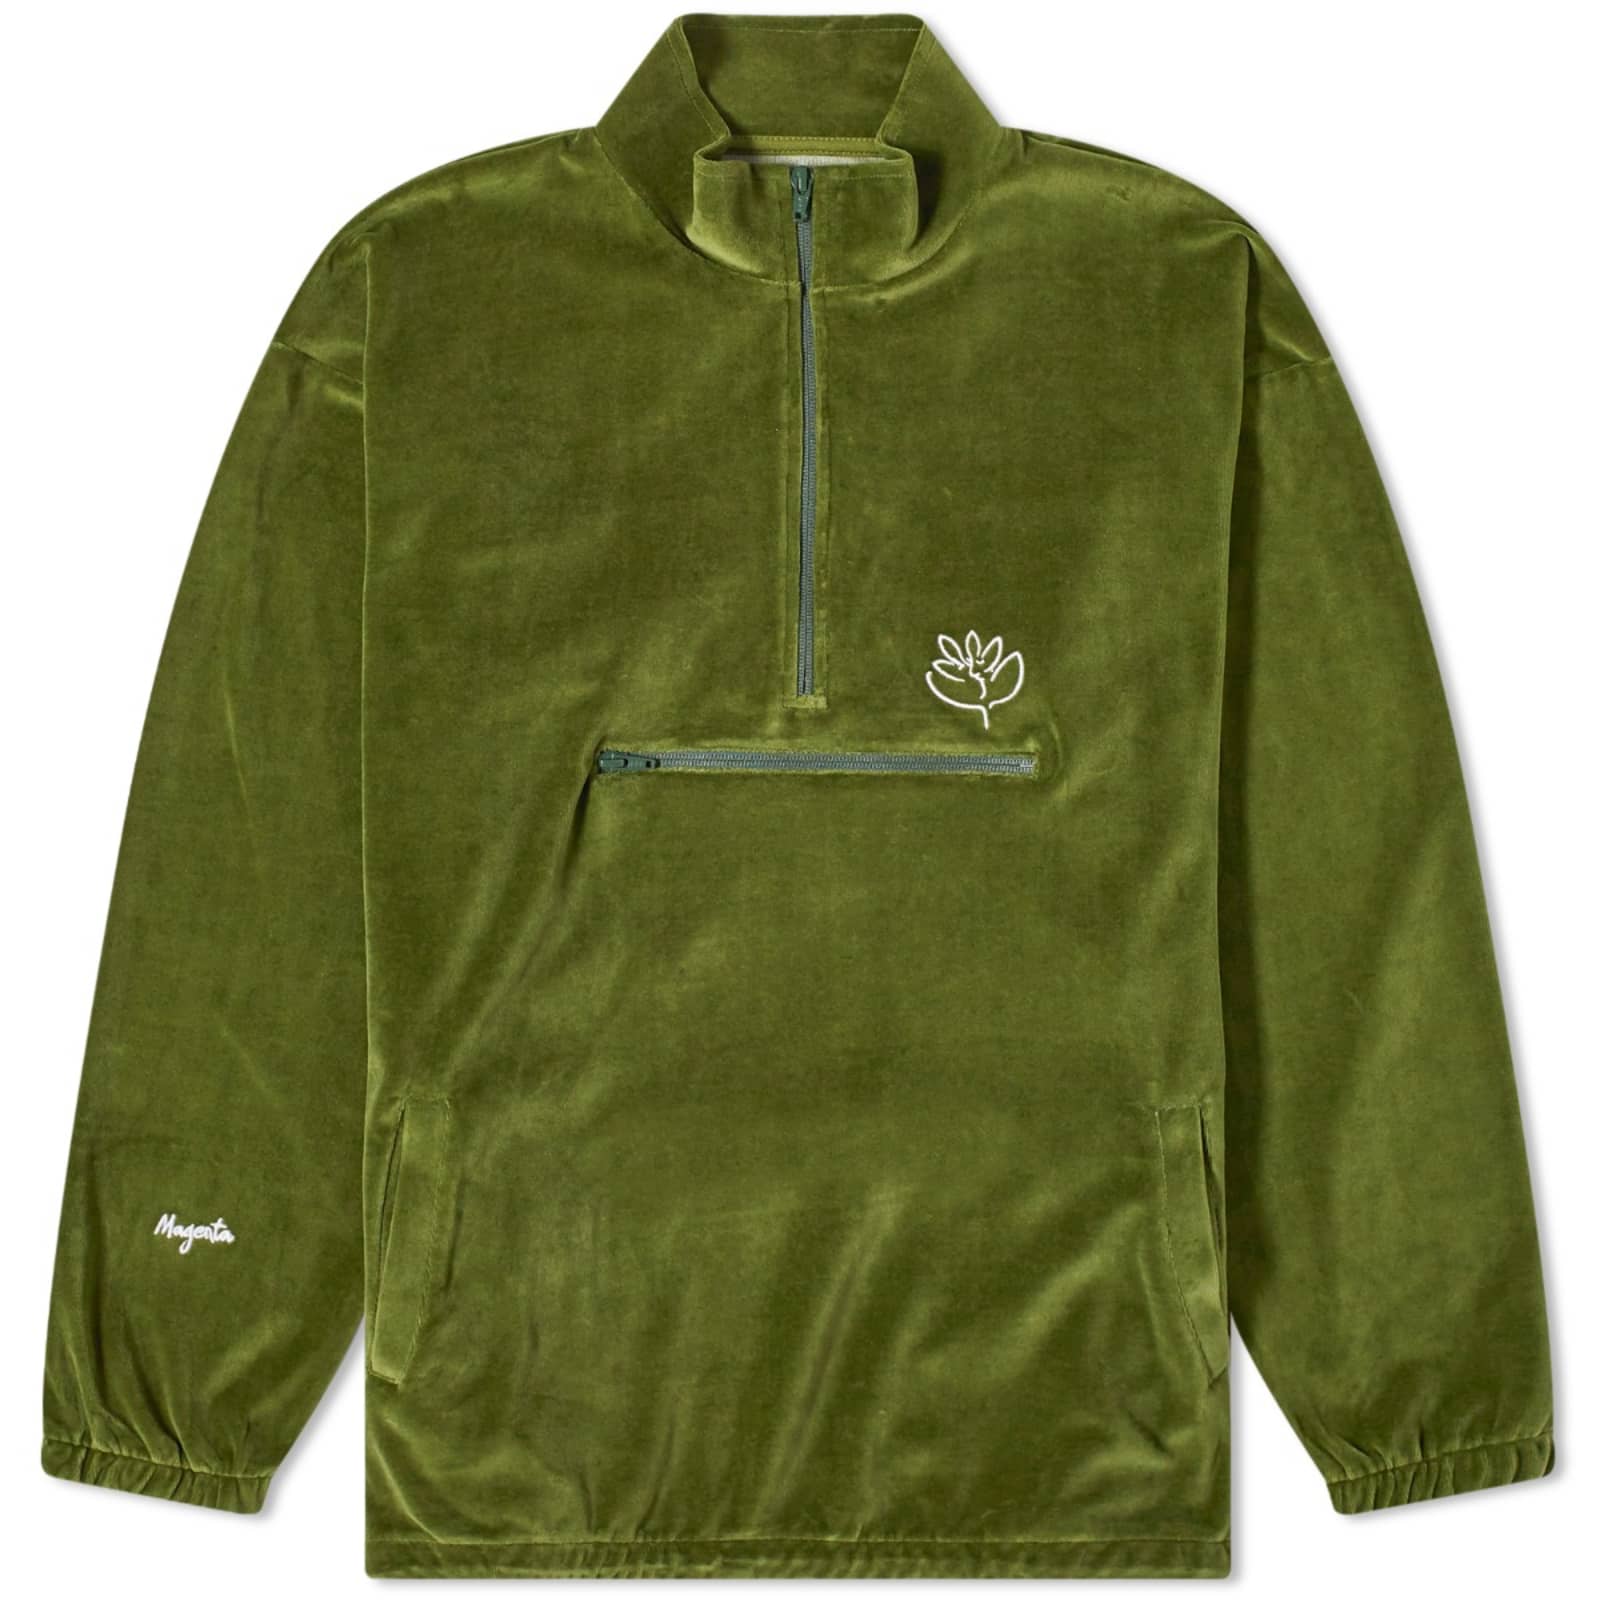 Куртка Magenta Dimanche Velour Half Zip, цвет Forest Green брош э гипербола с половиной